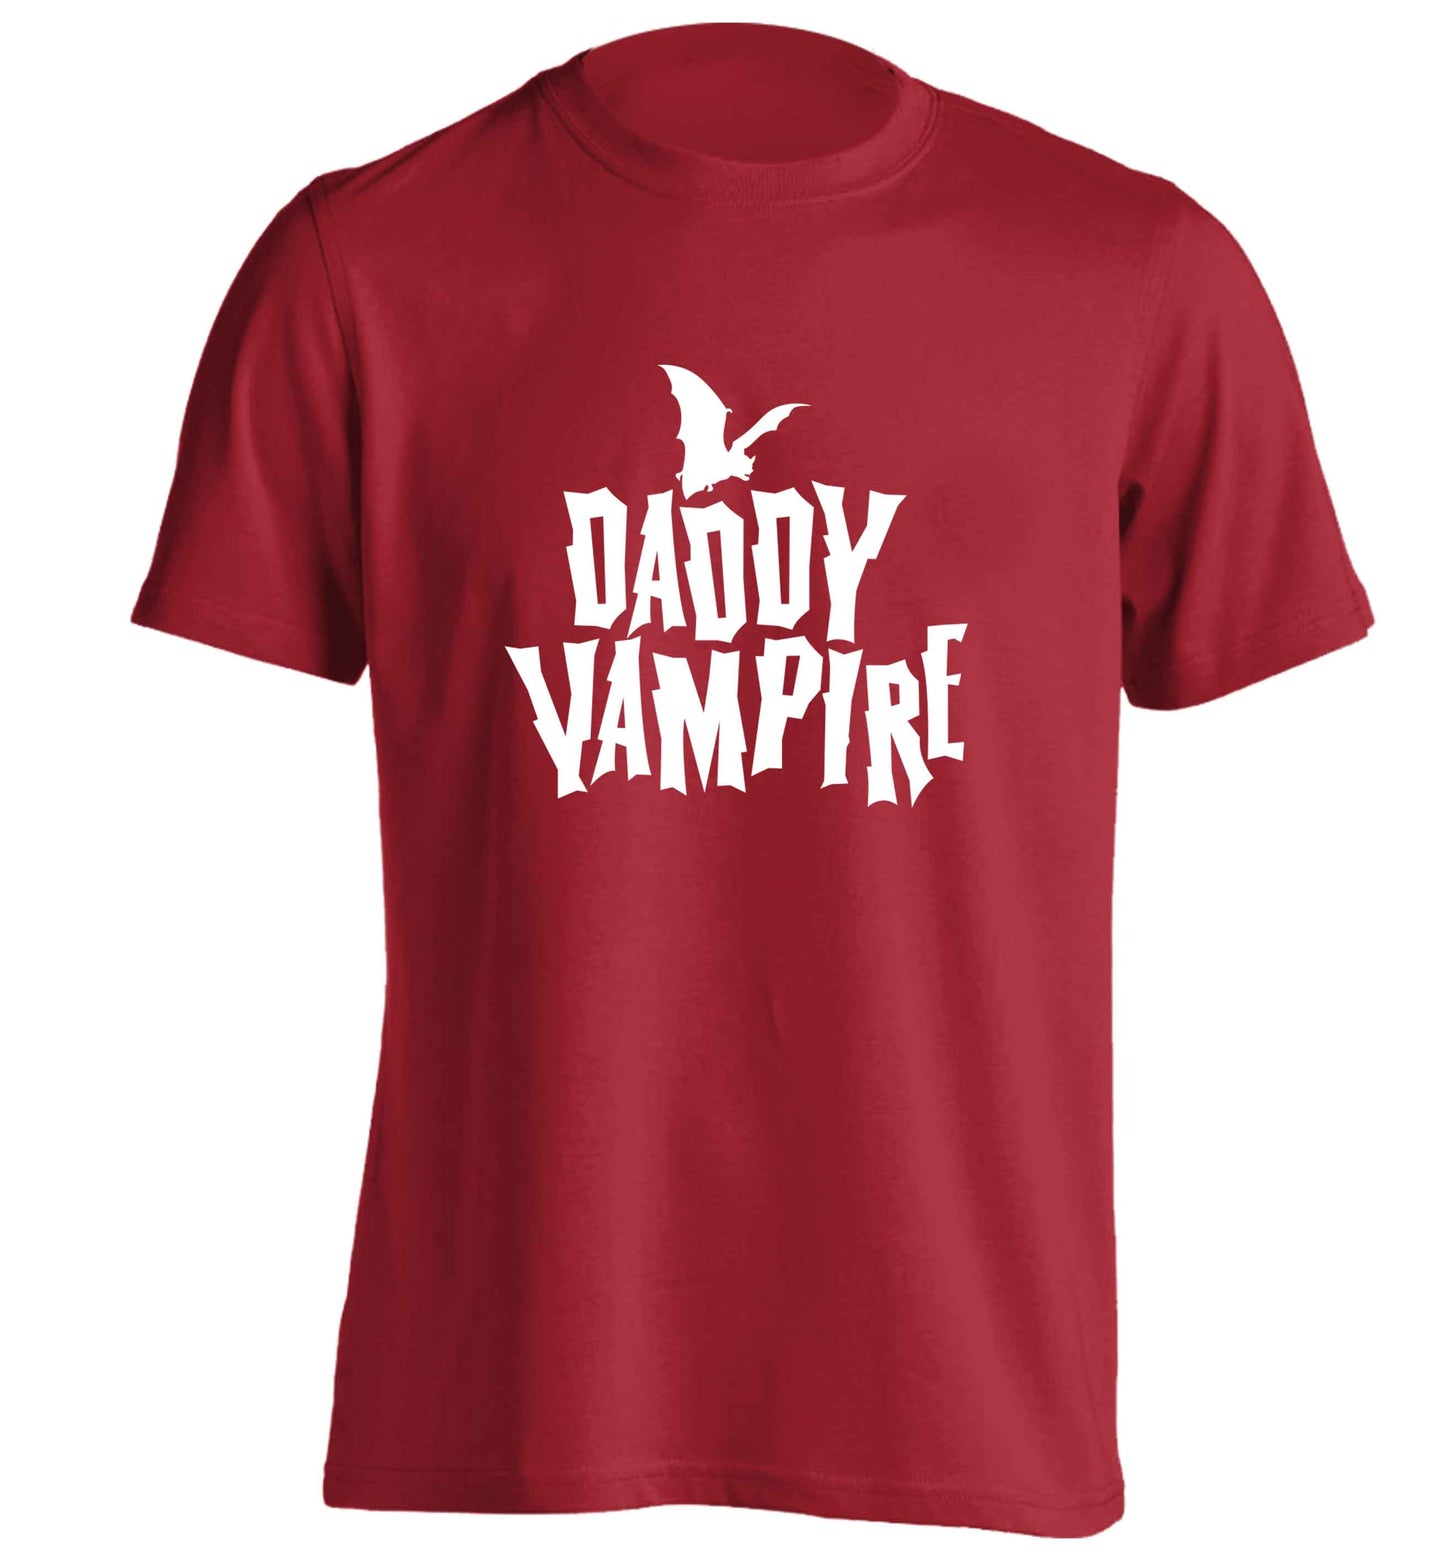 Daddy vampire adults unisex red Tshirt 2XL